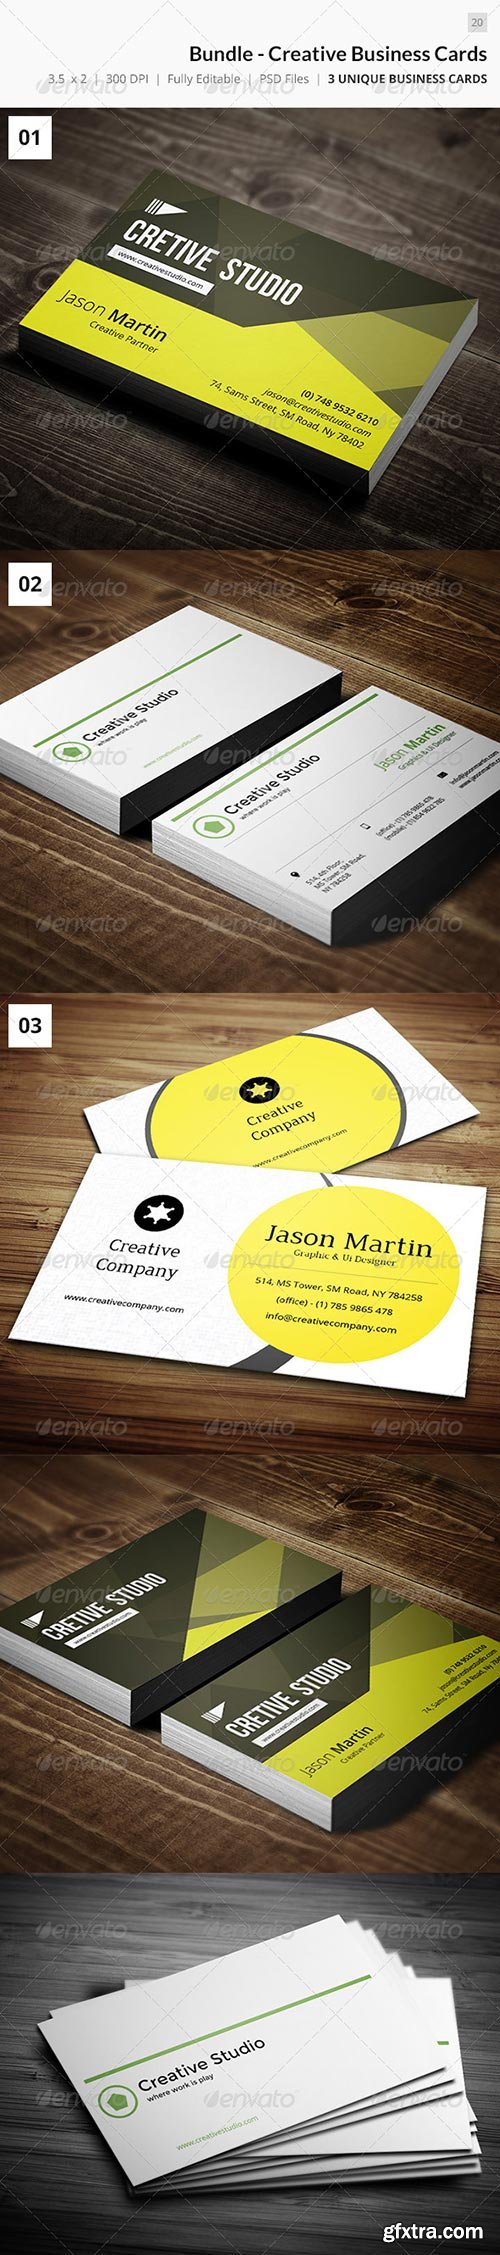 Graphicriver - Bundle - Creative Business Cards 20